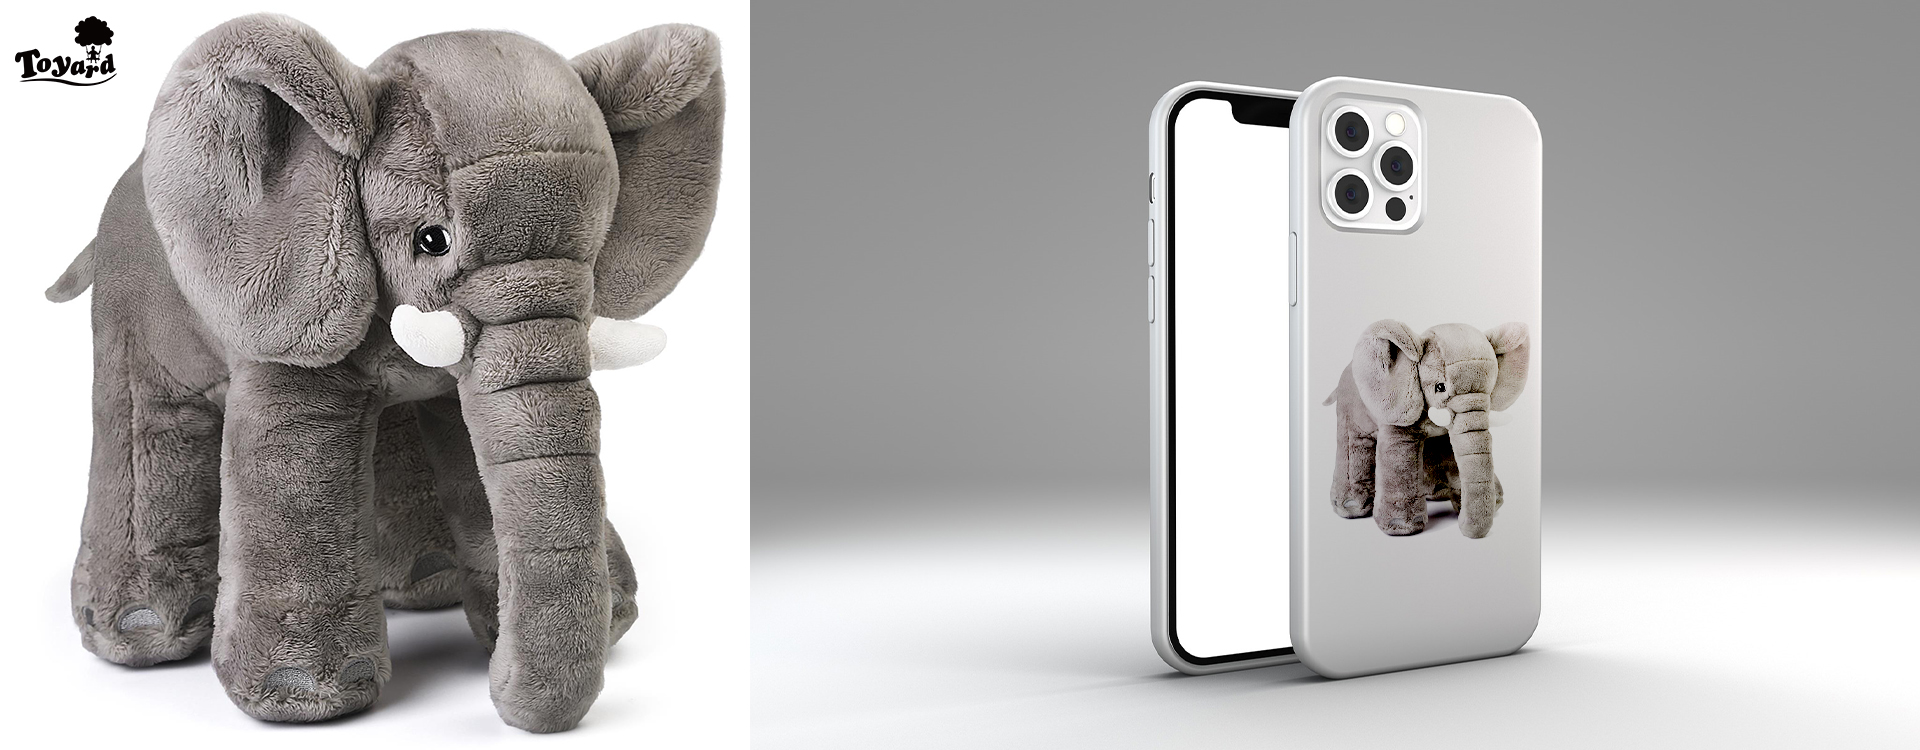 Toy wholesale factory make a stuffed elephant case 